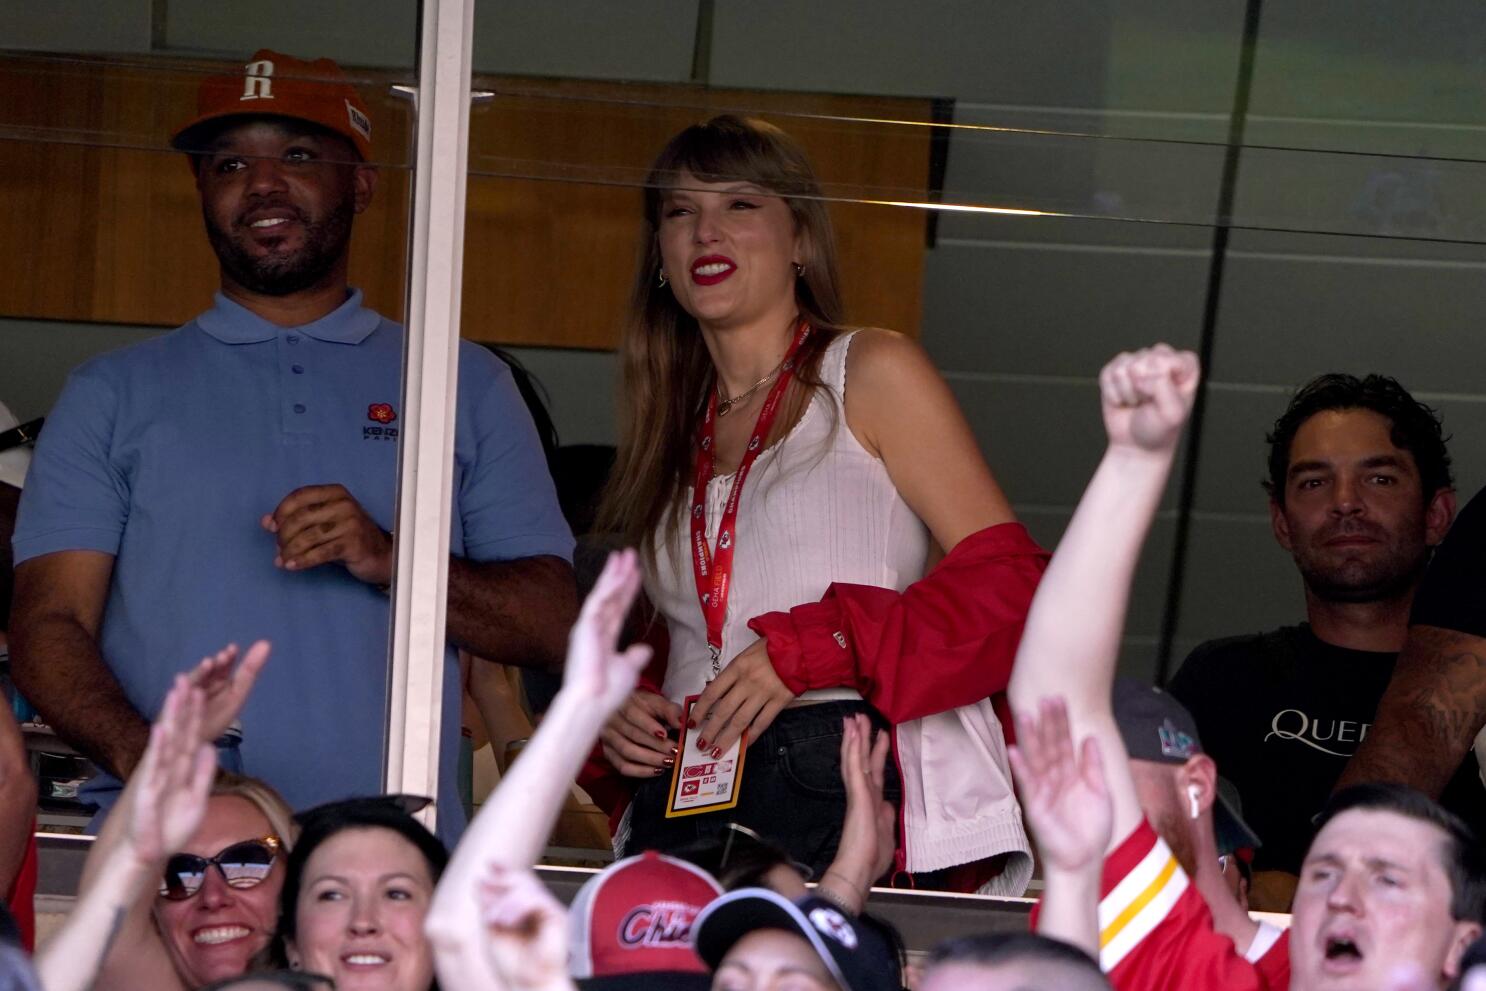 Taylor Swift Relationship Won't Impact Focus Says Travis Kelce